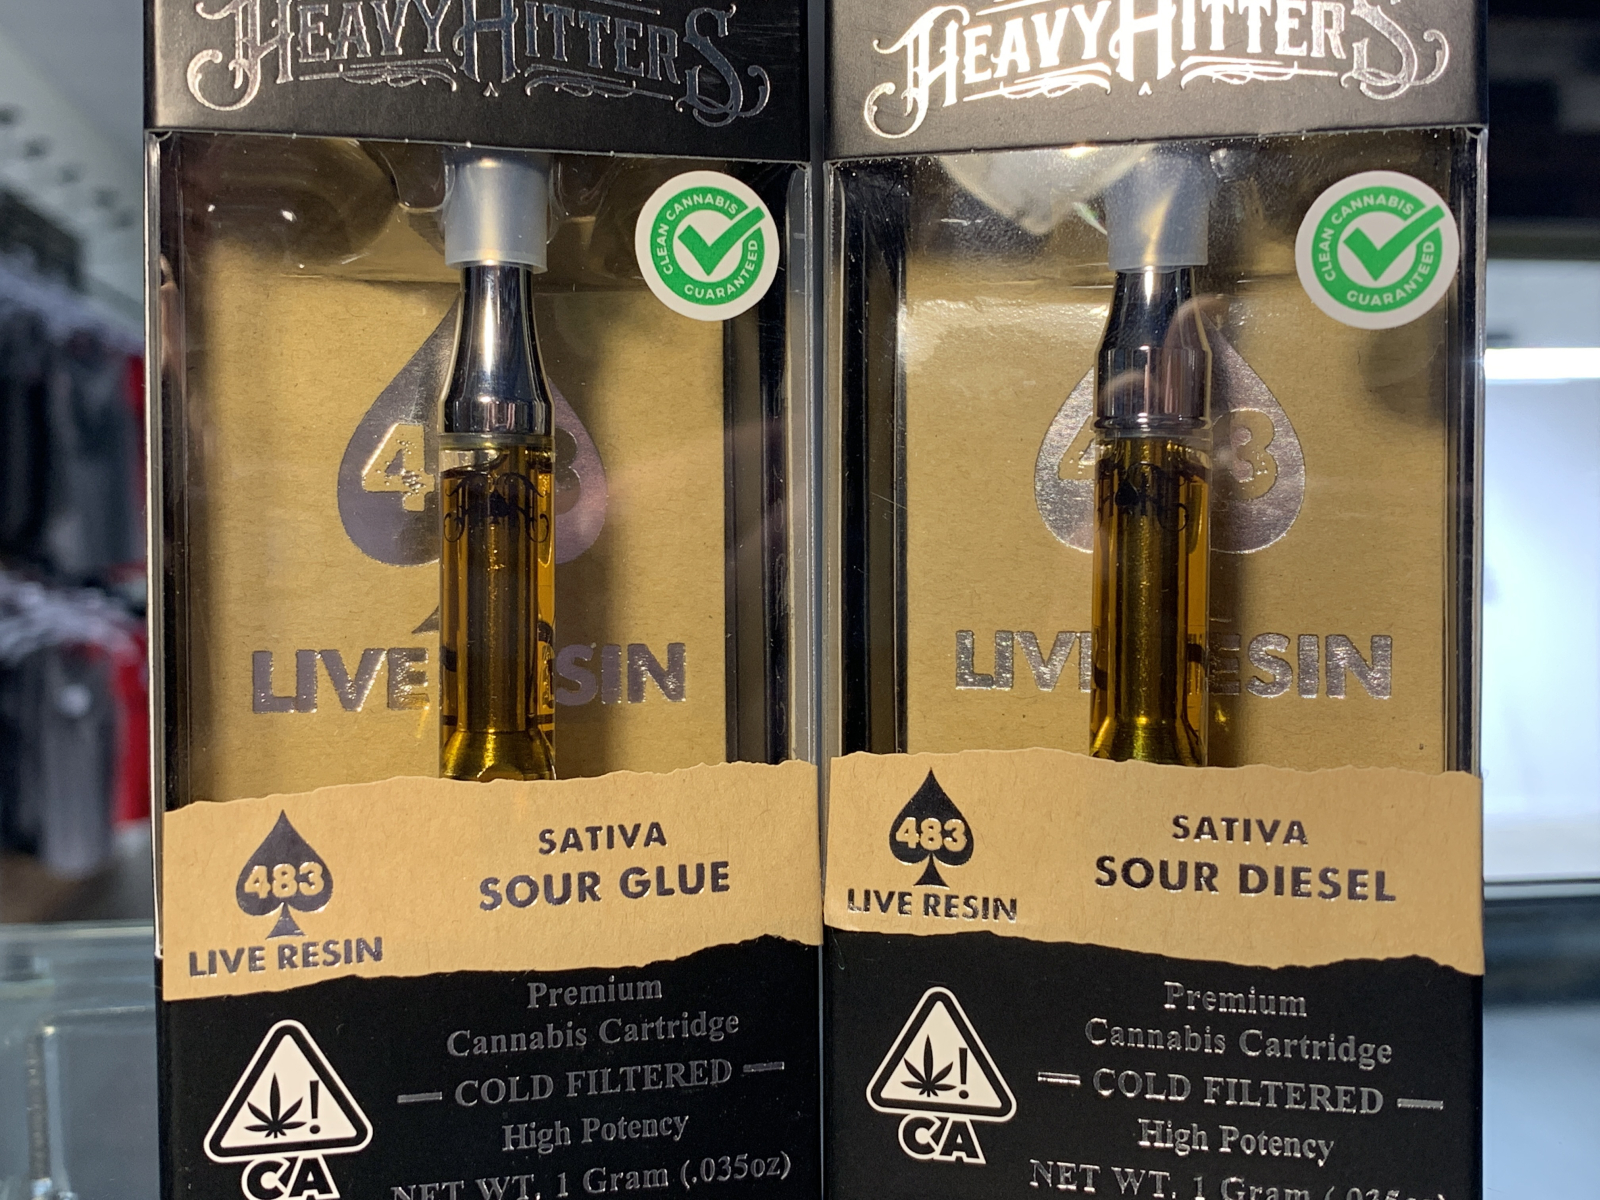 Heavy hitter sour diesel live resin sauce cartridge 